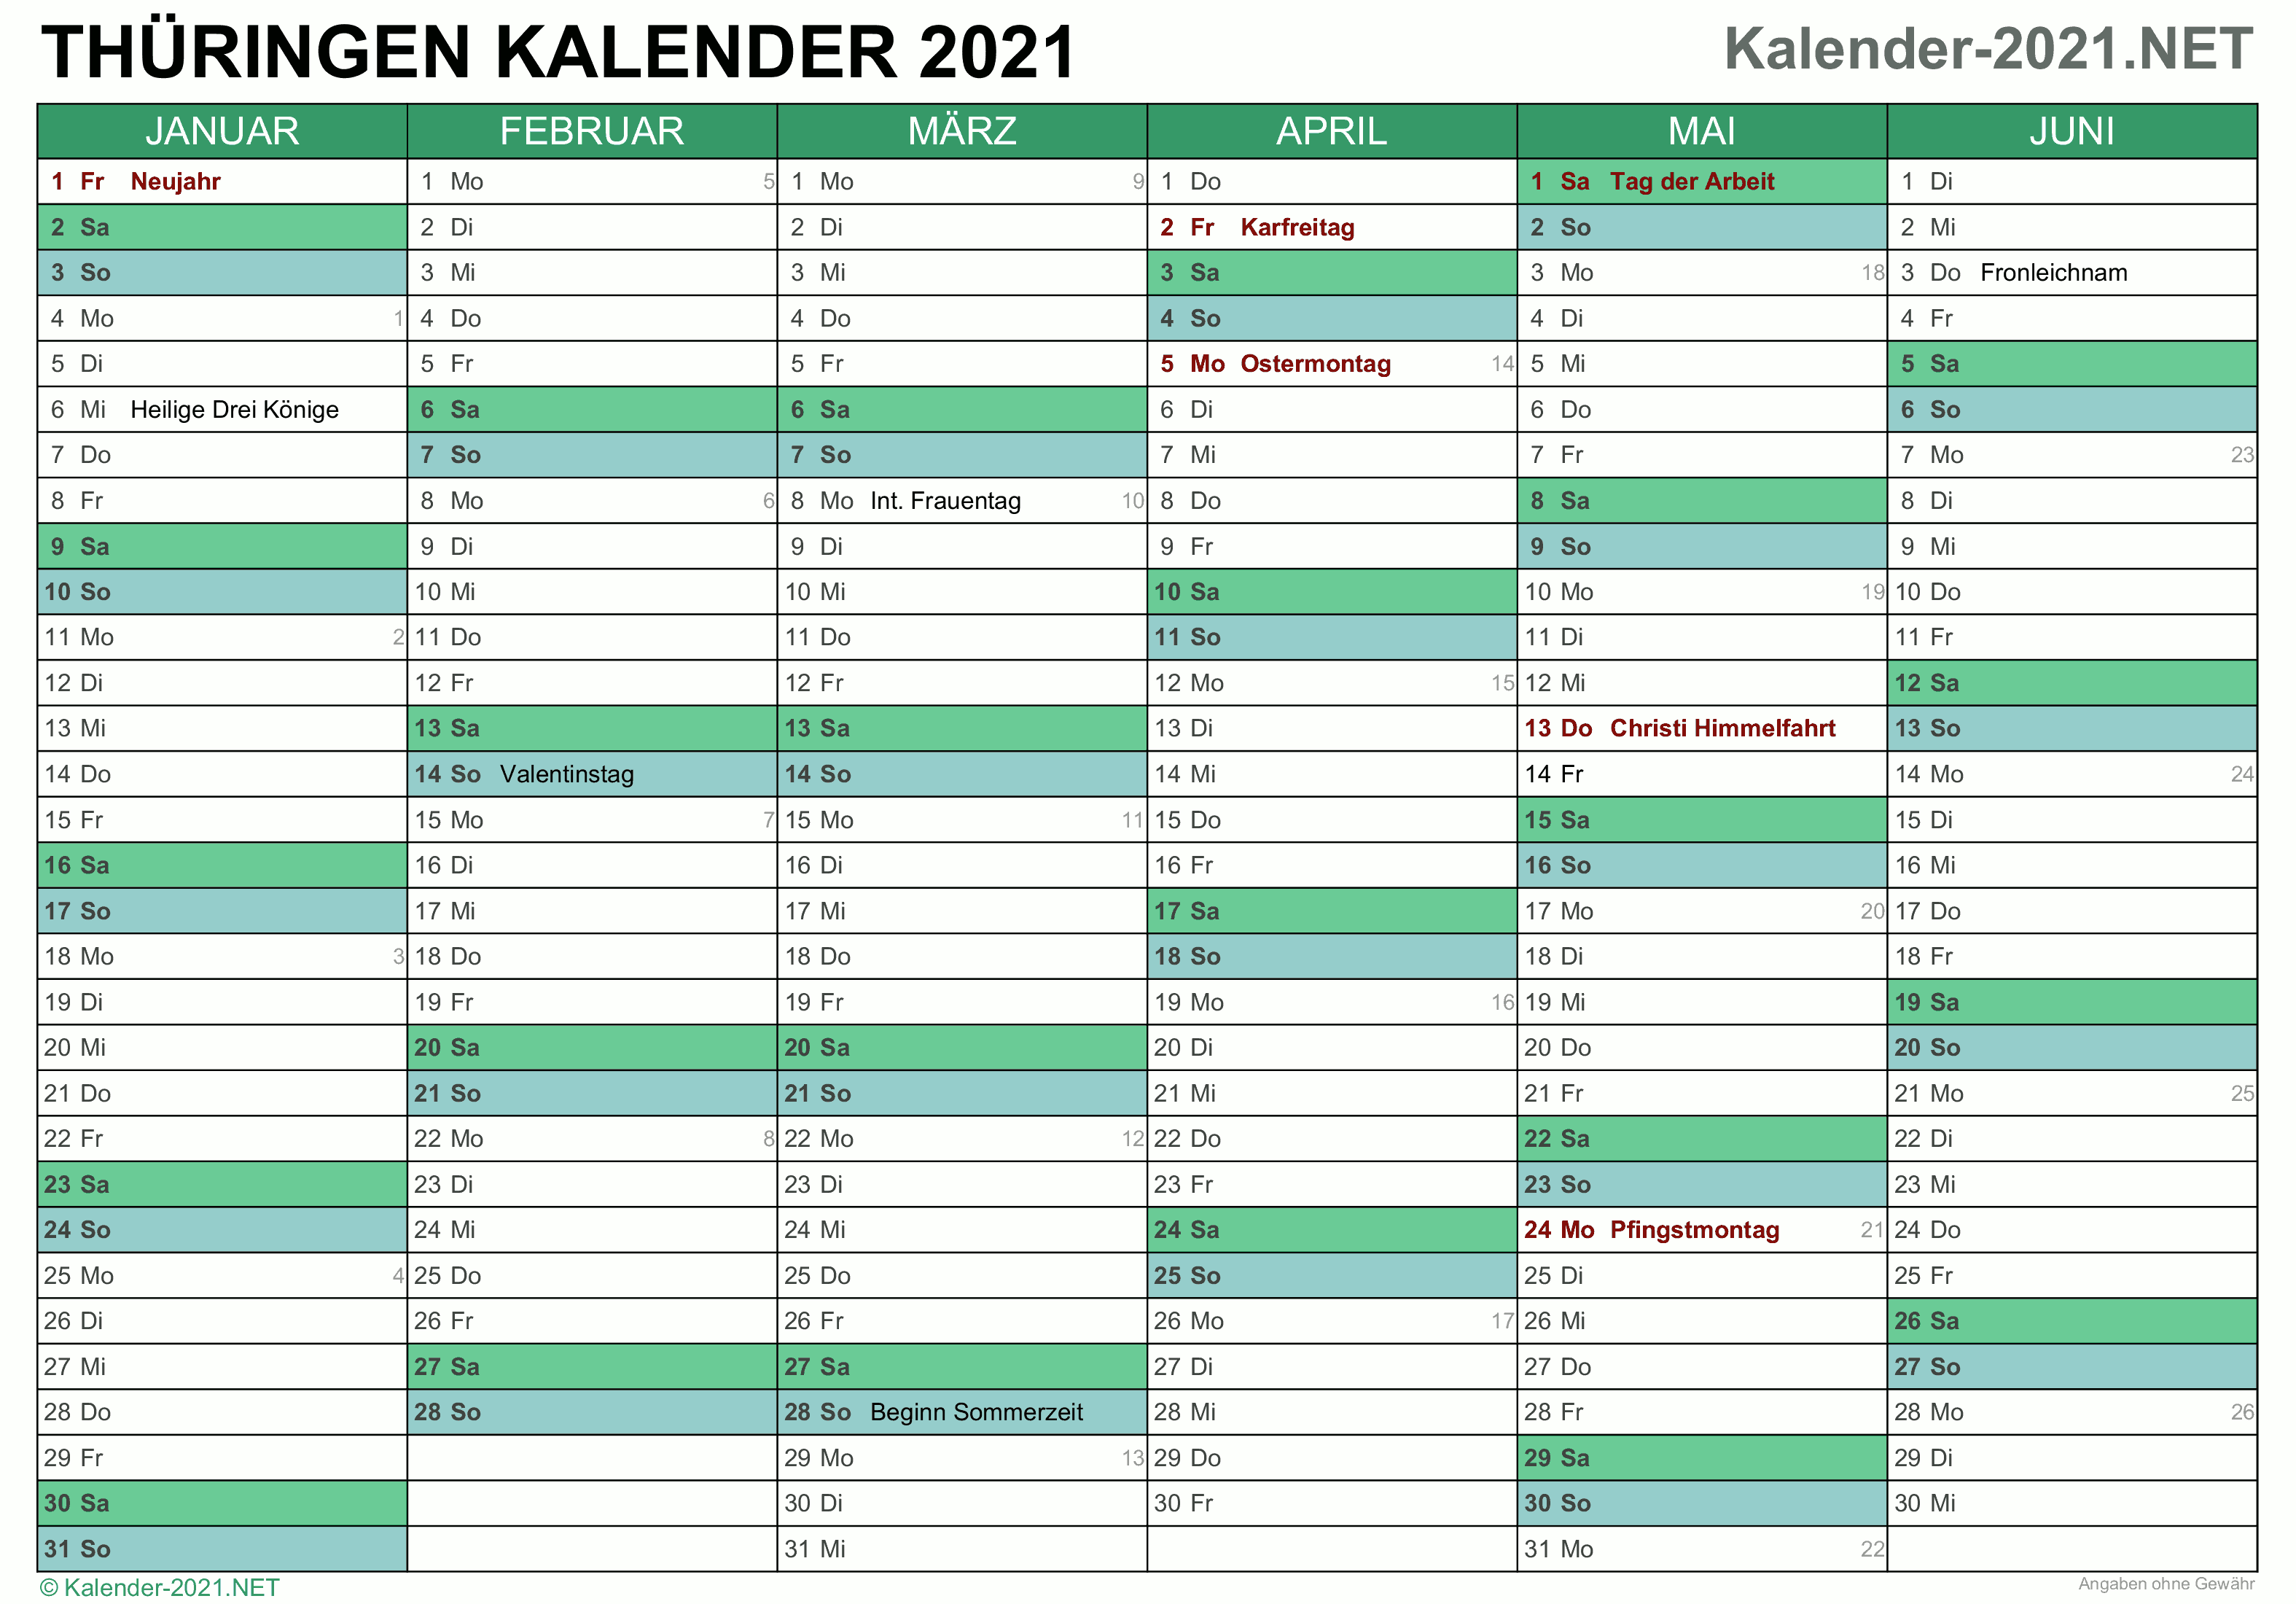 Kalender 2021 Thuringen